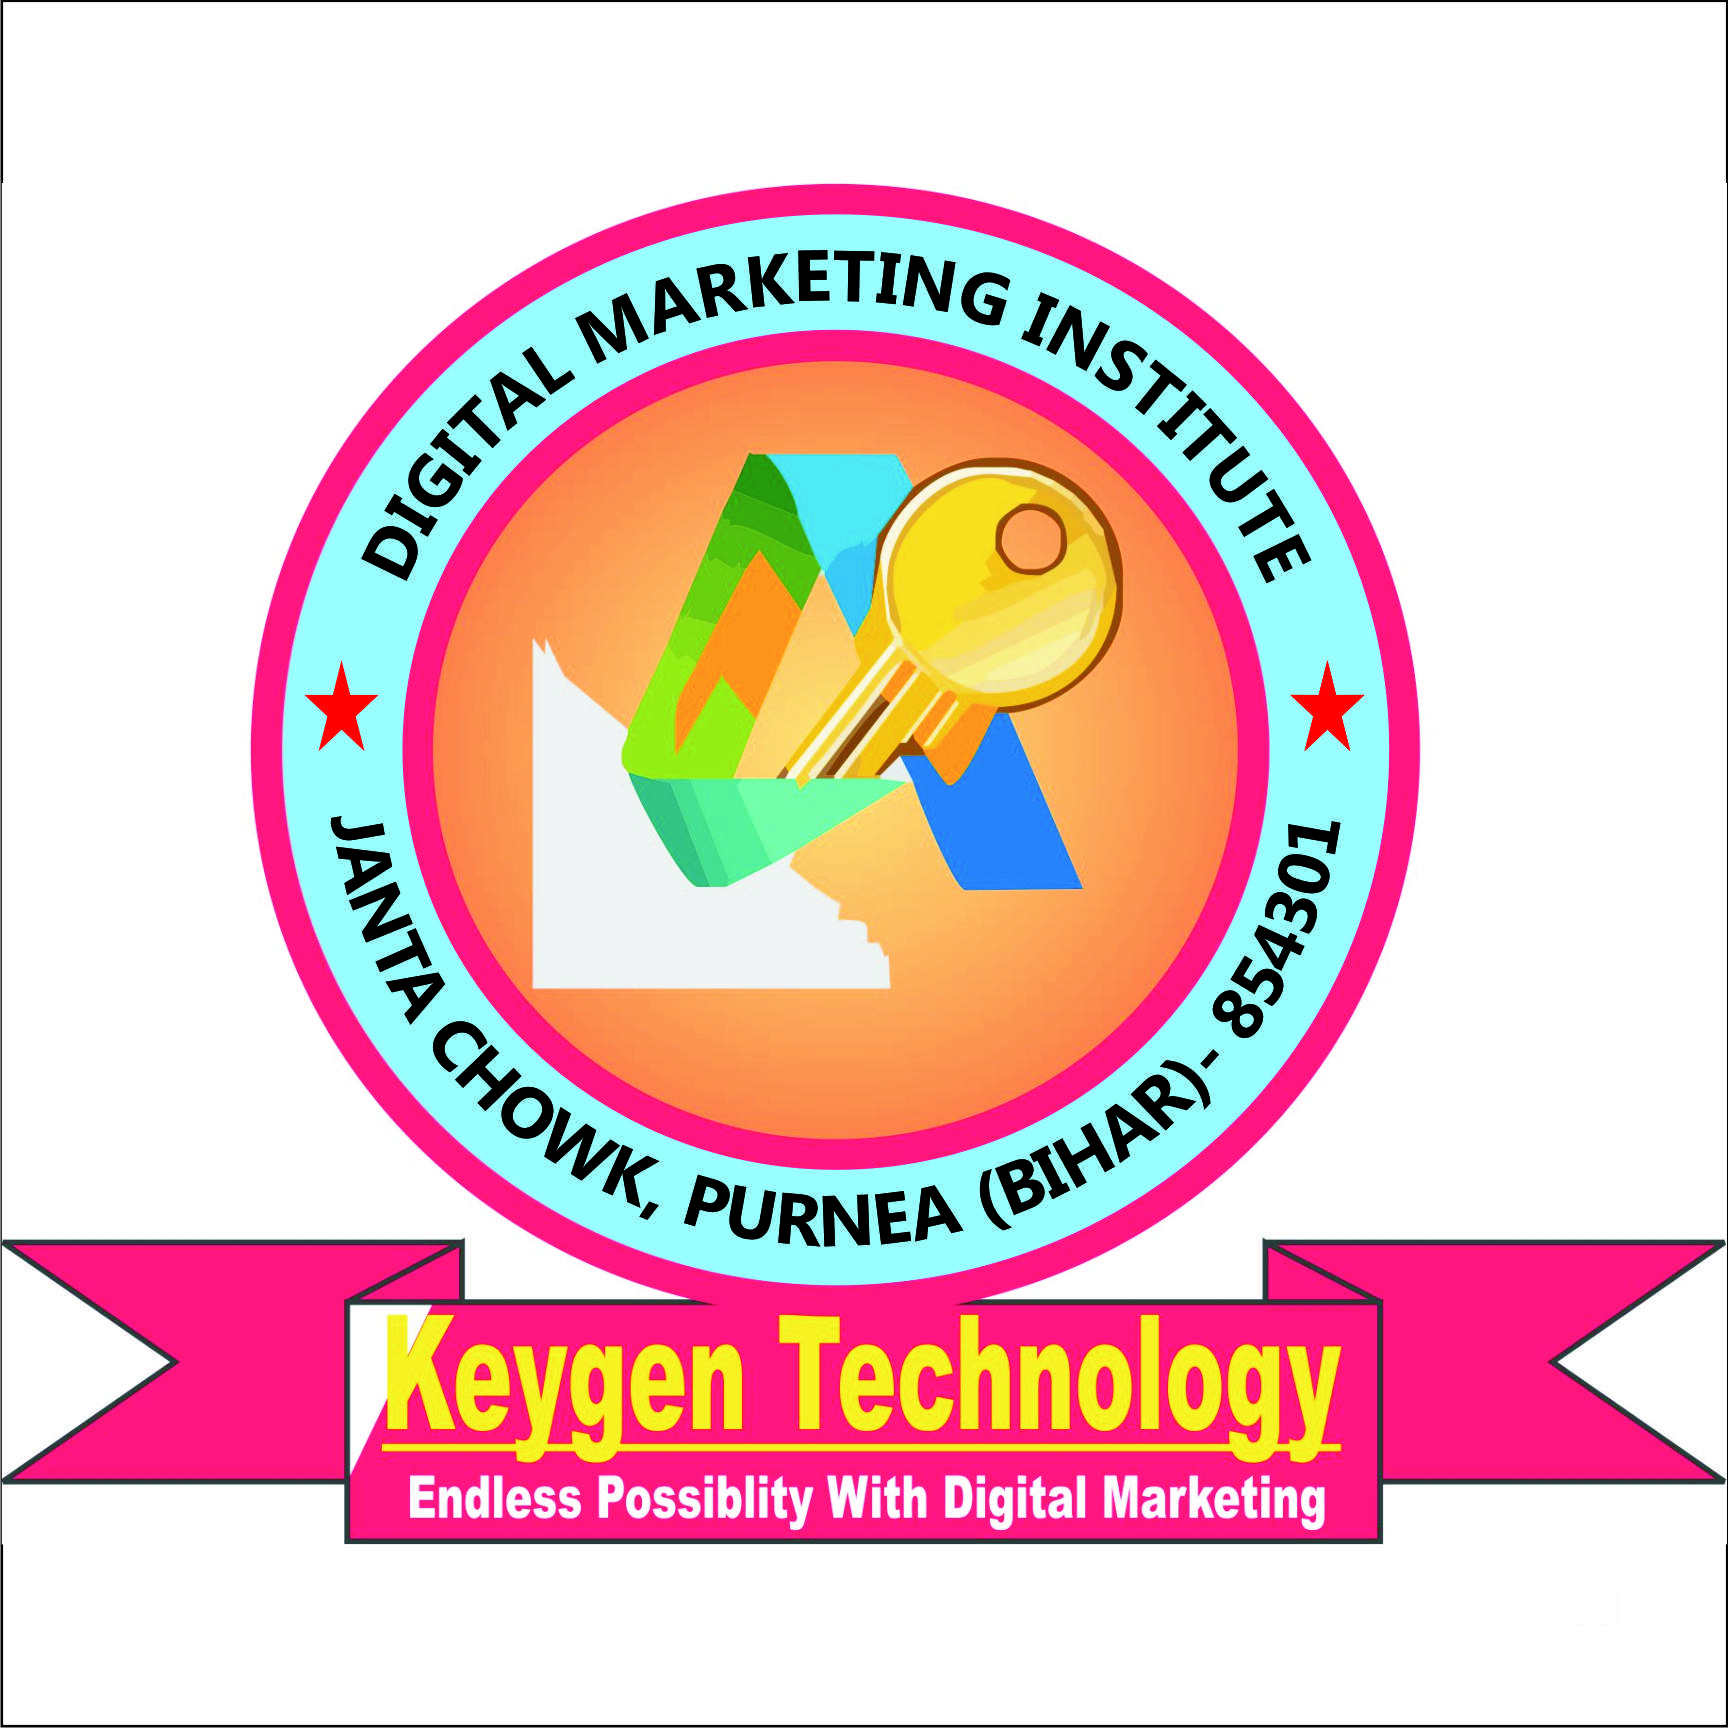 Keygen Logo - Keygen Technology Photo, , Purnia- Picture & Image Gallery